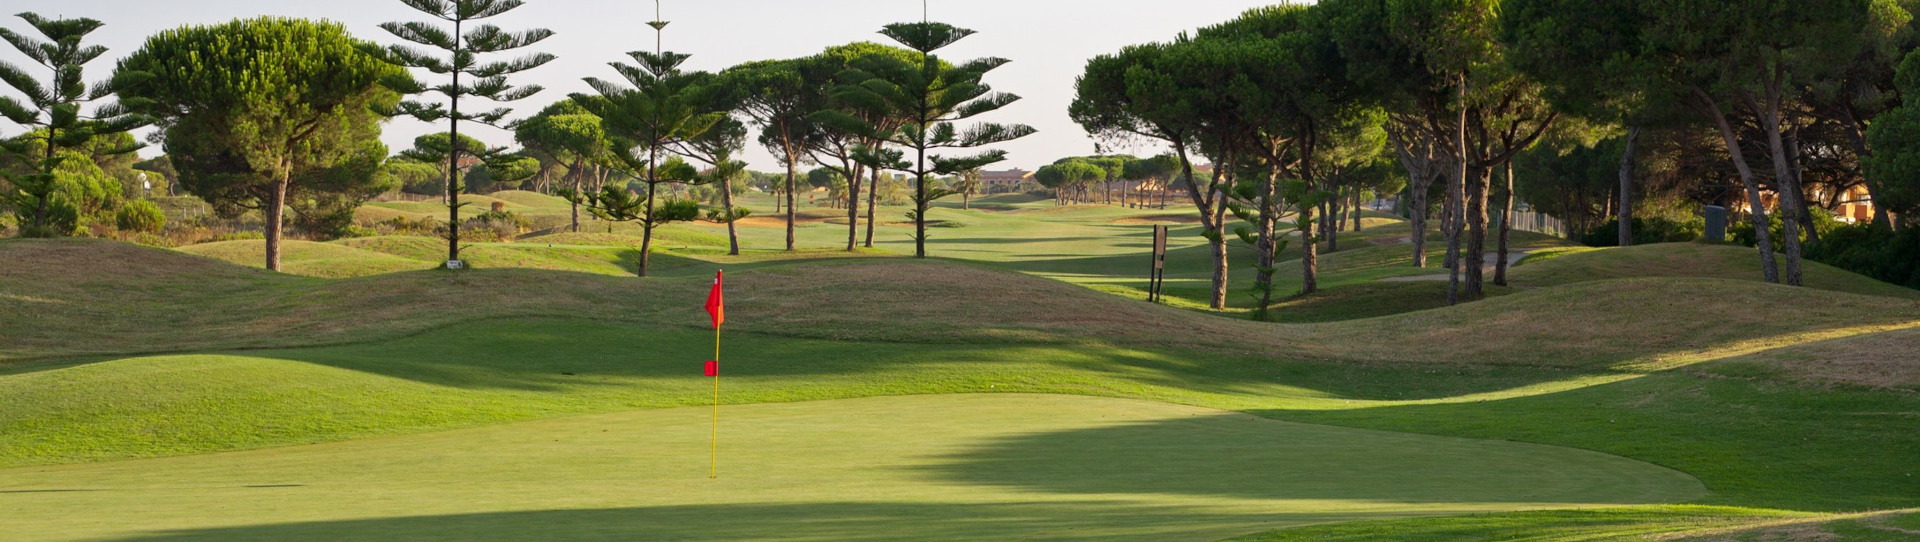 Spain golf courses - Sancti Petri Hills Golf - Photo 2